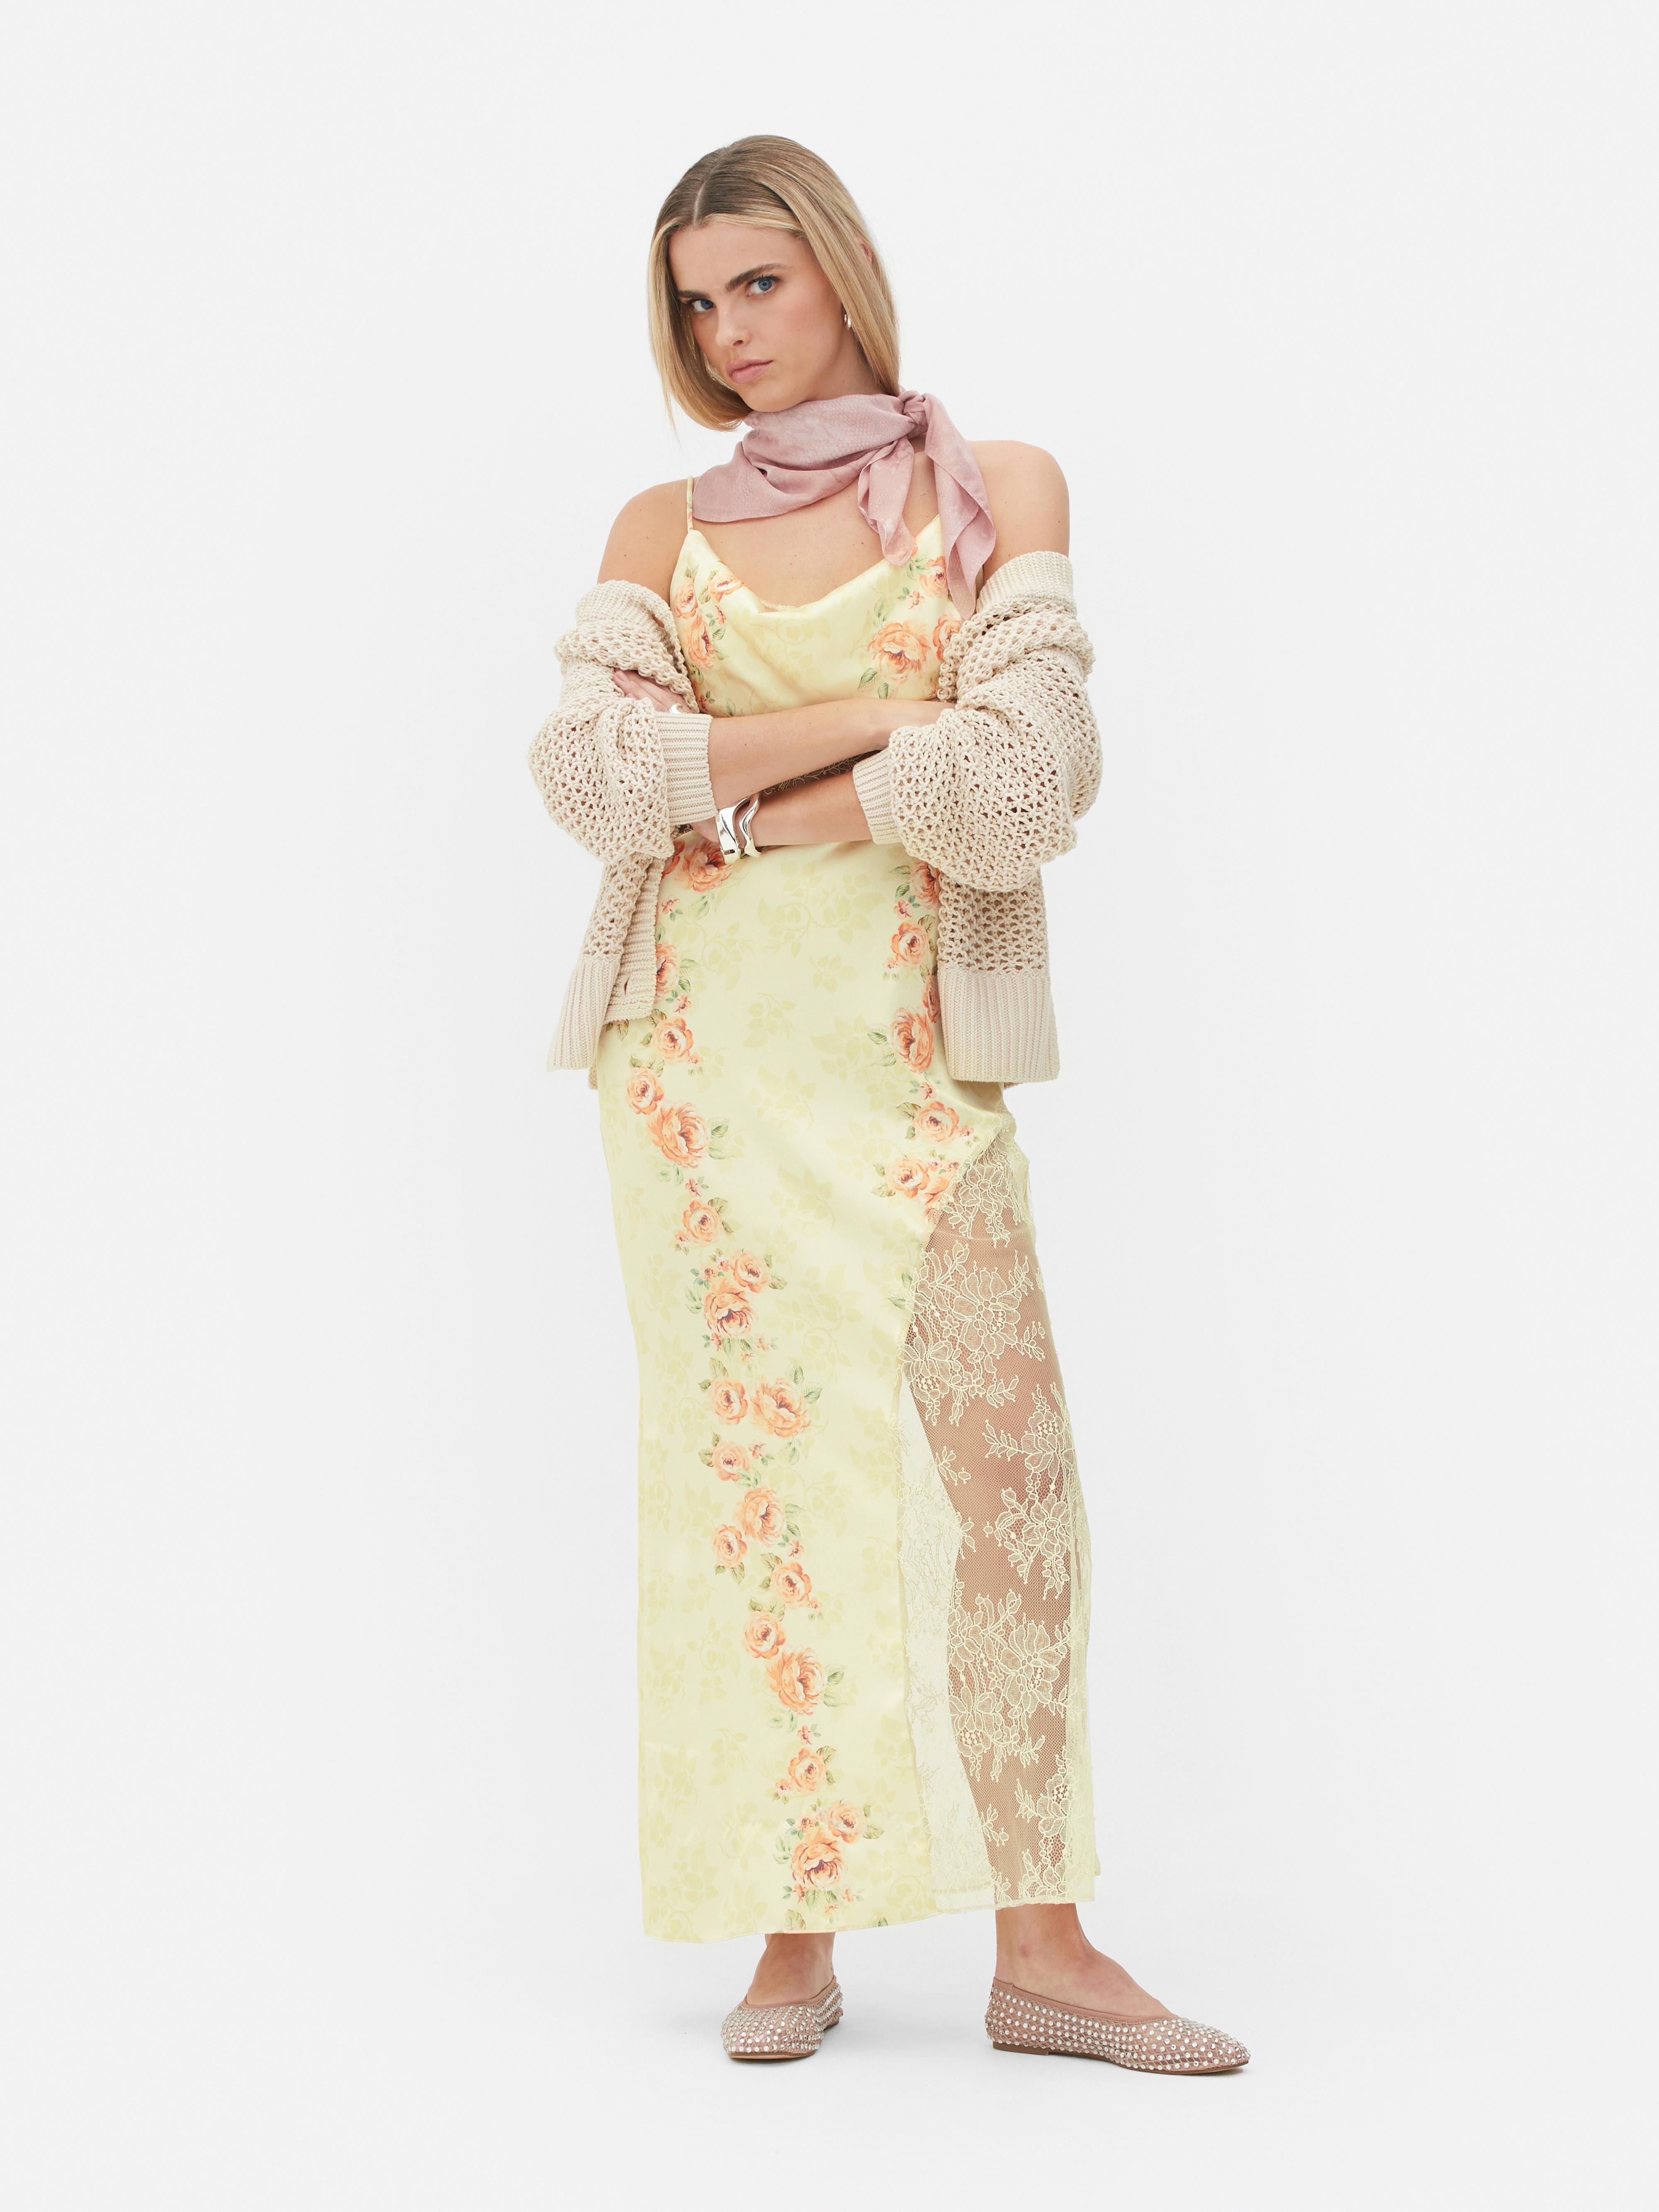 Rita Ora Floral Satin Midi Dress